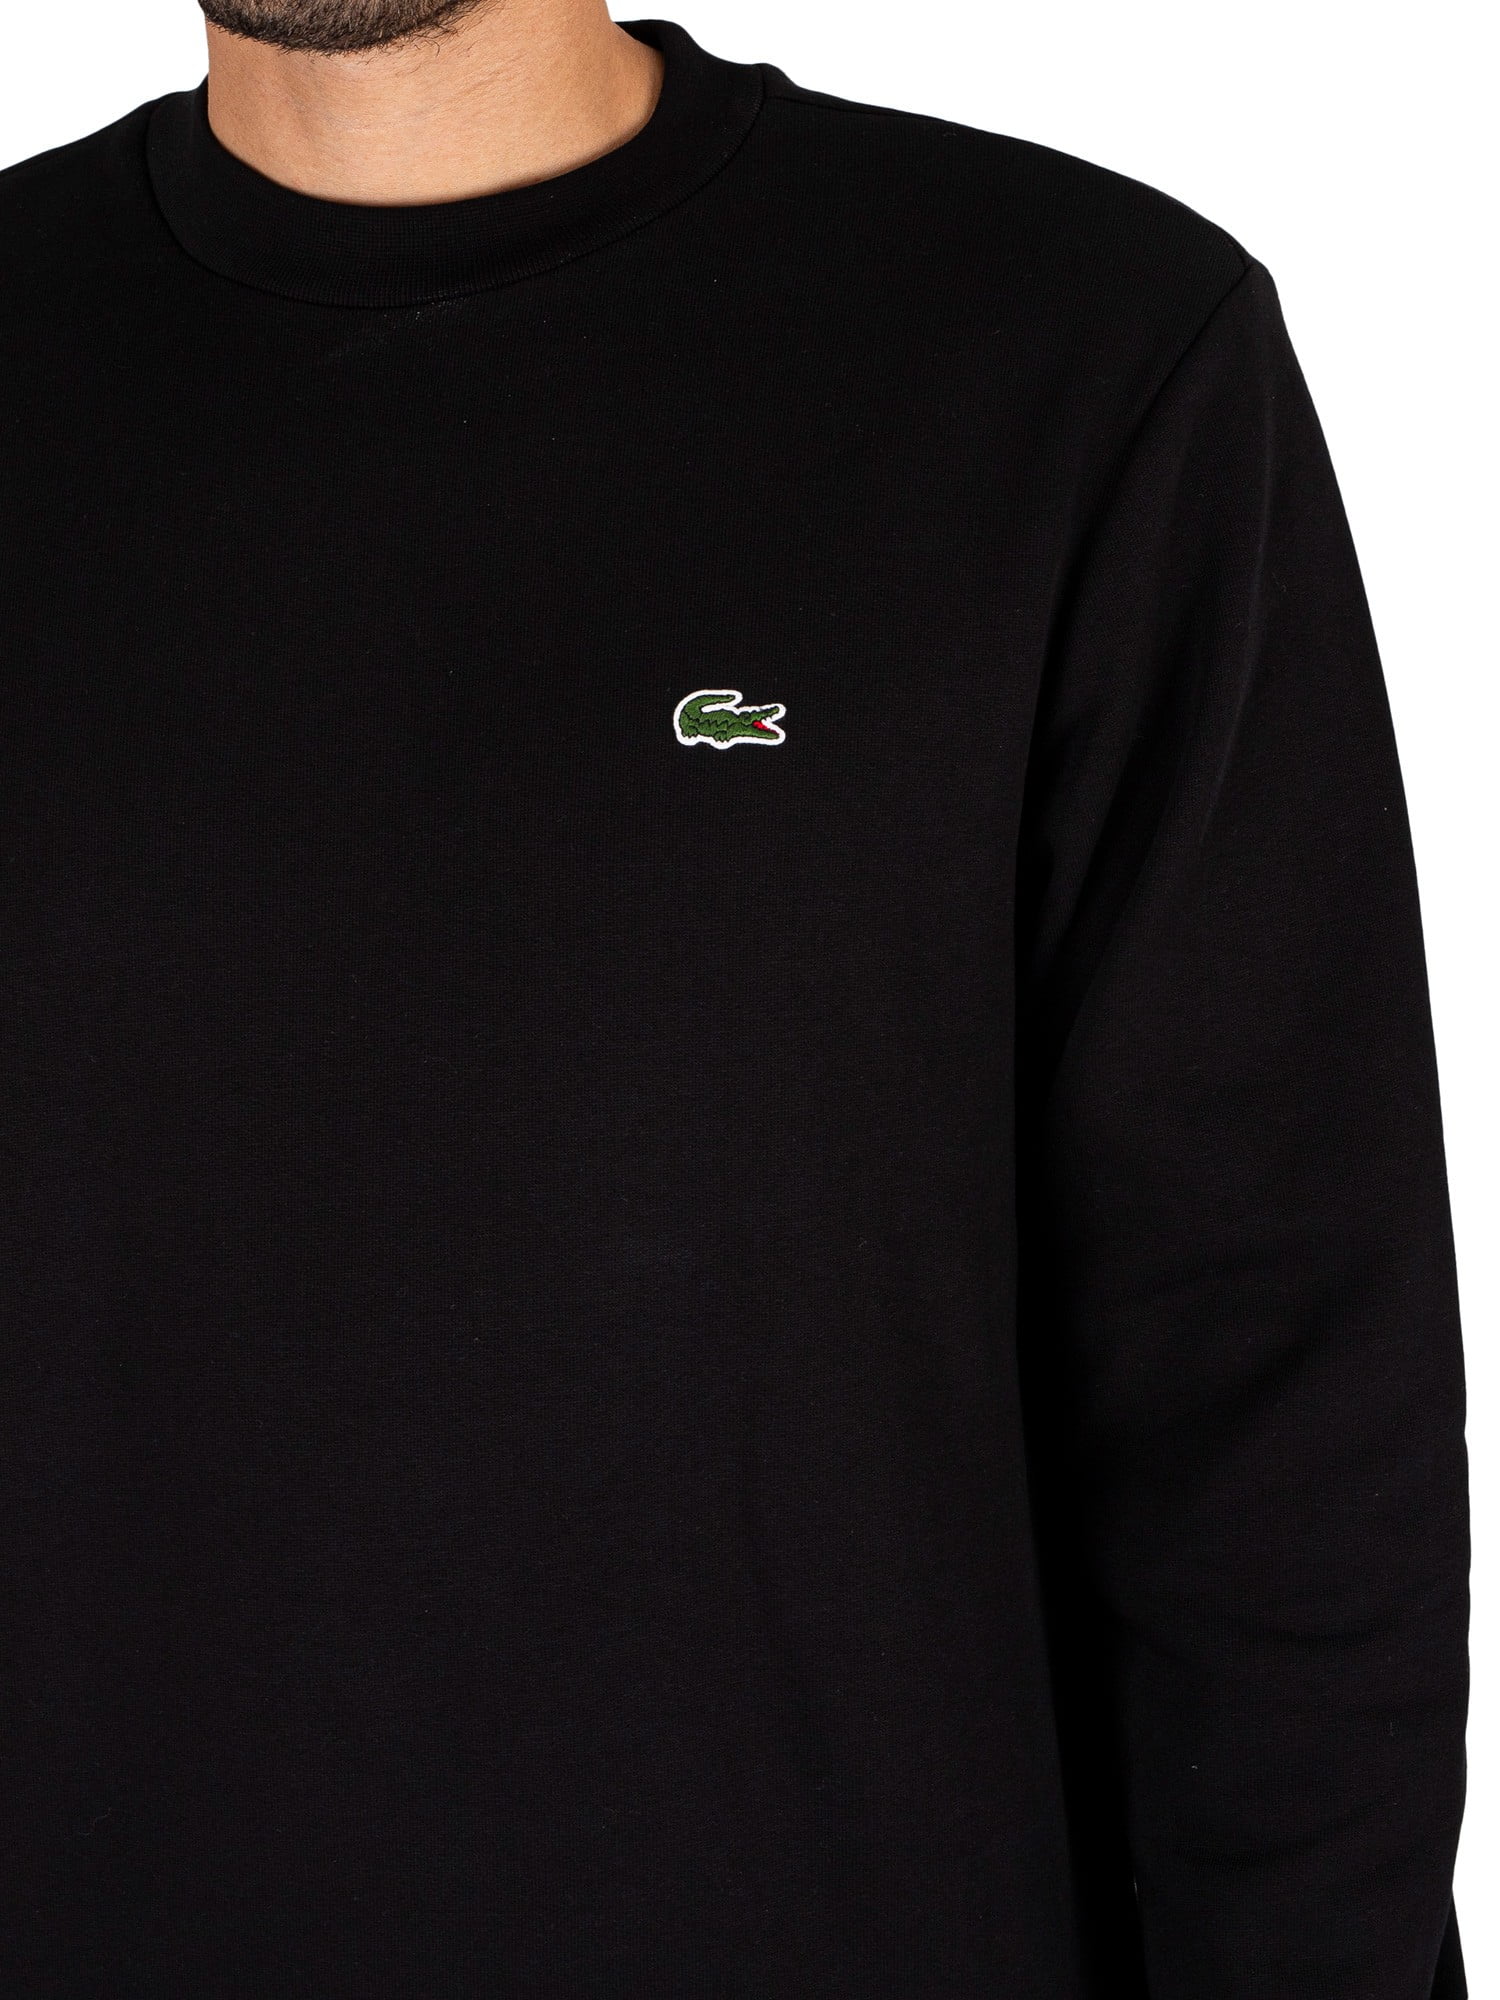 Logo Lacoste Sweatshirt, Black